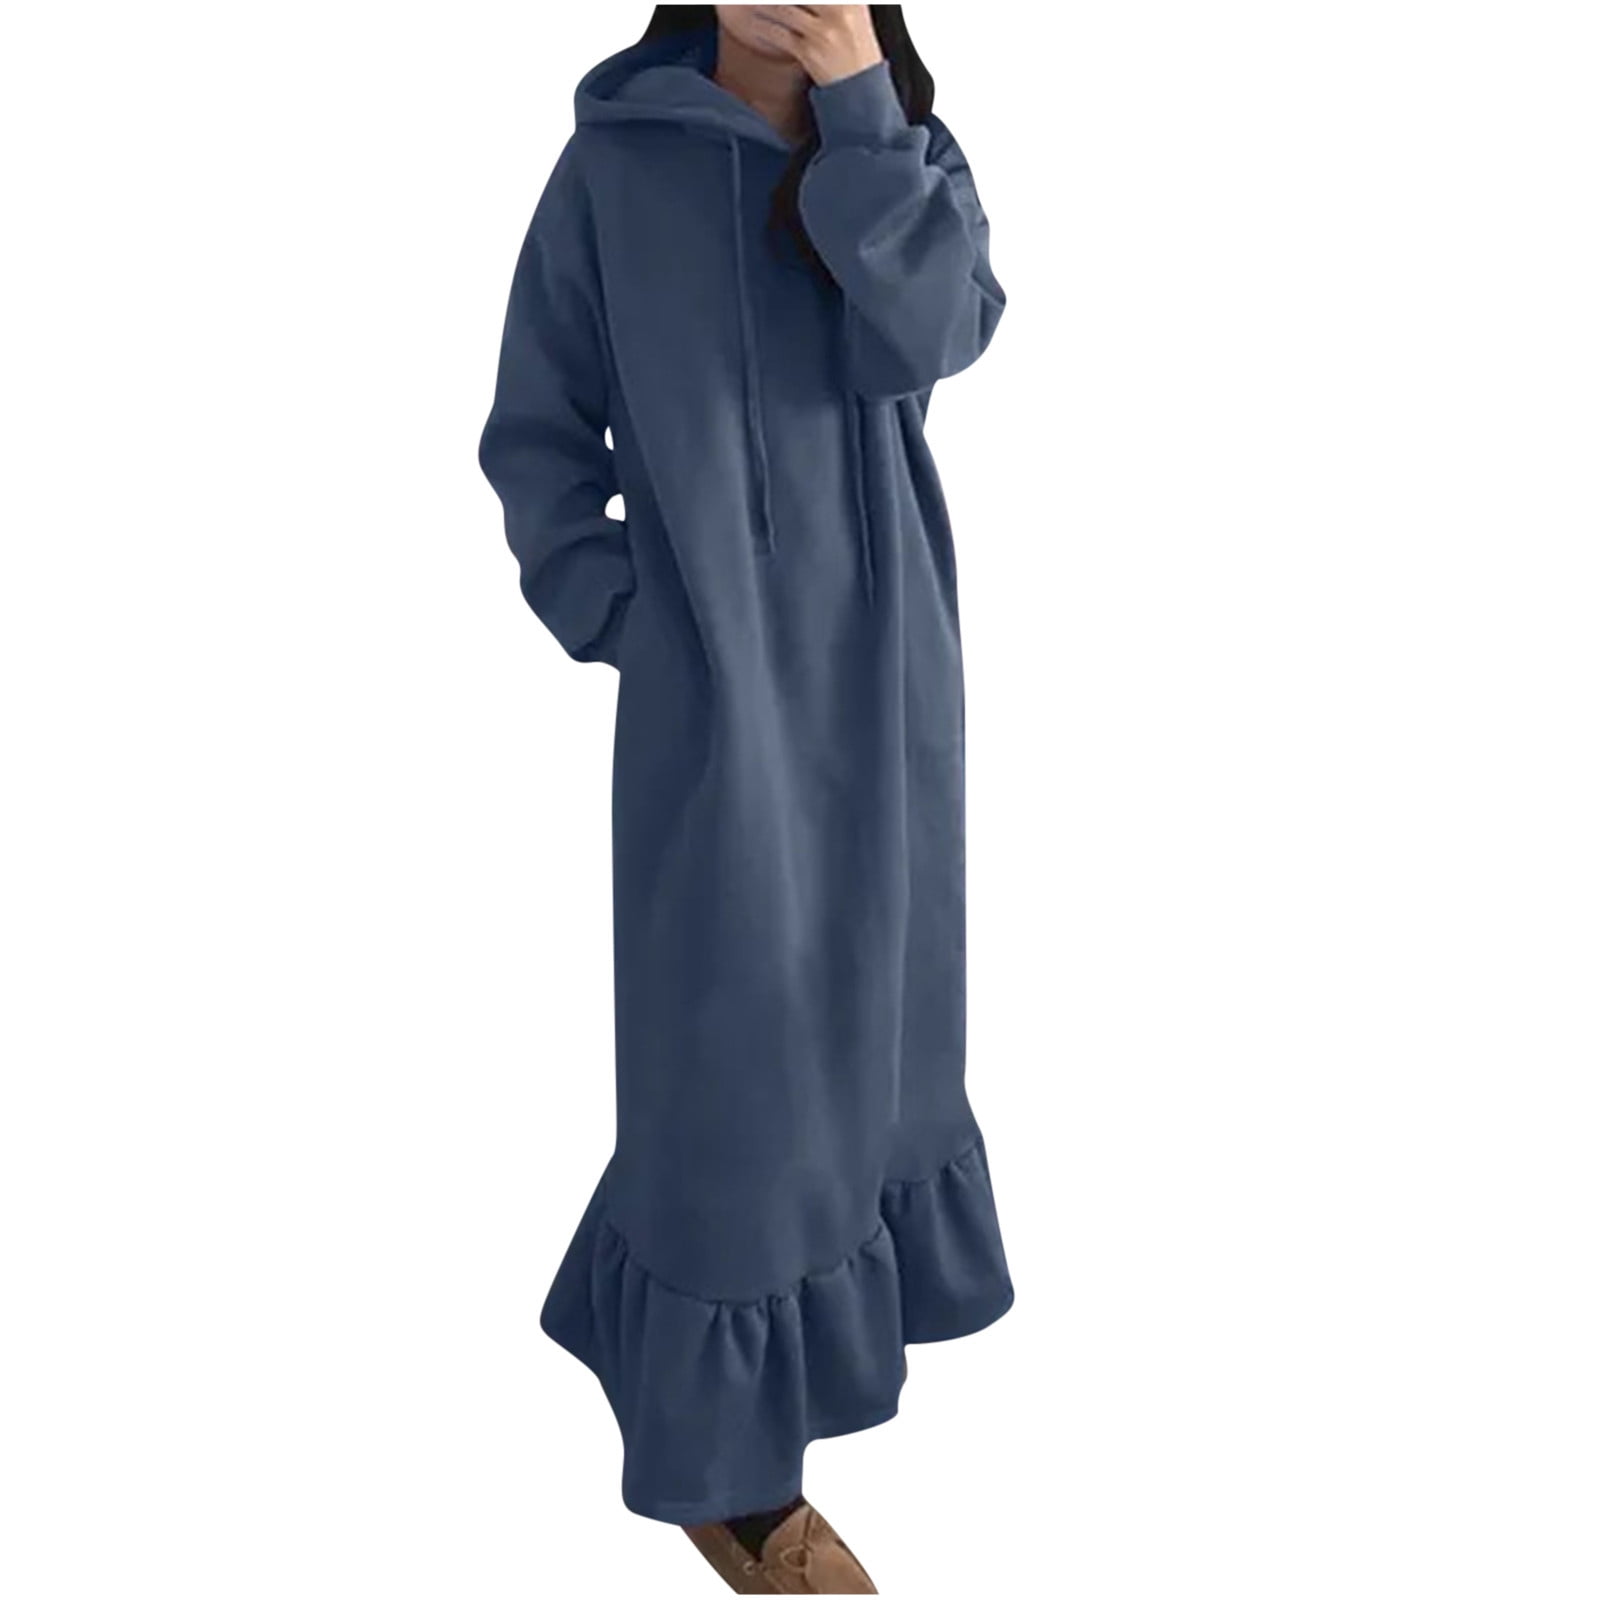 Olyvenn Womens Plus Size Pocket Winter Warm Long Dress Comfy Loose